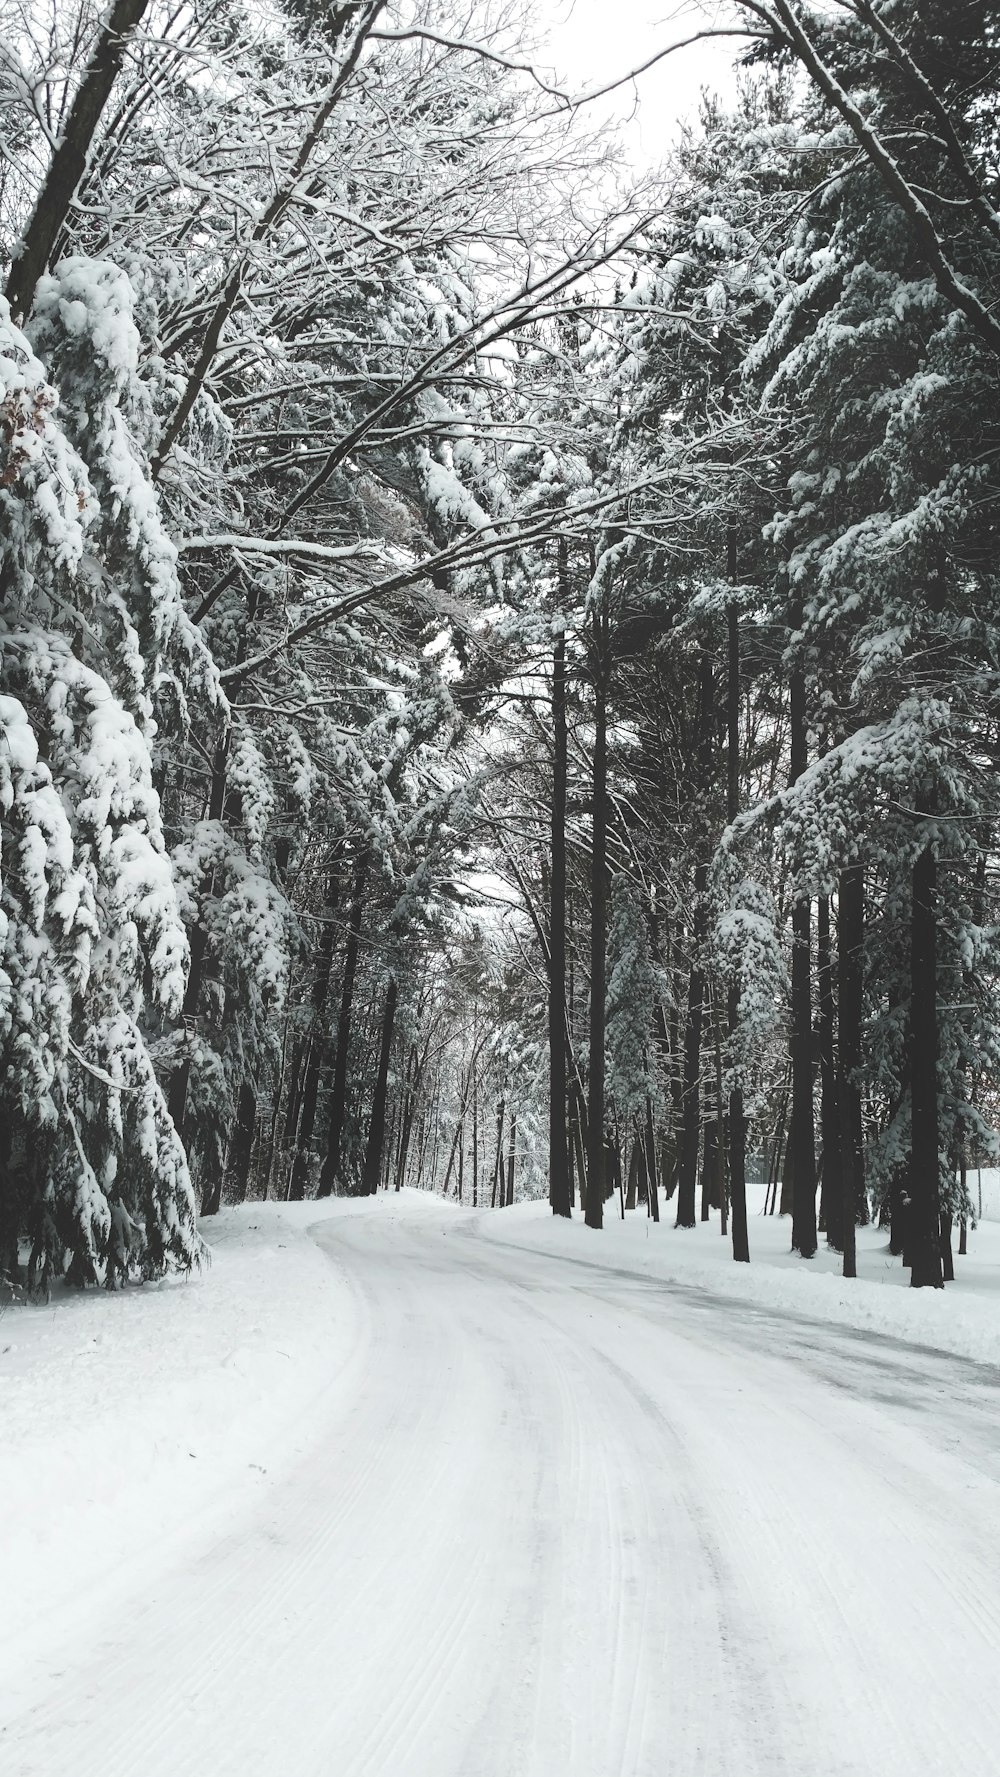 дорога, окруженная деревьями зимой